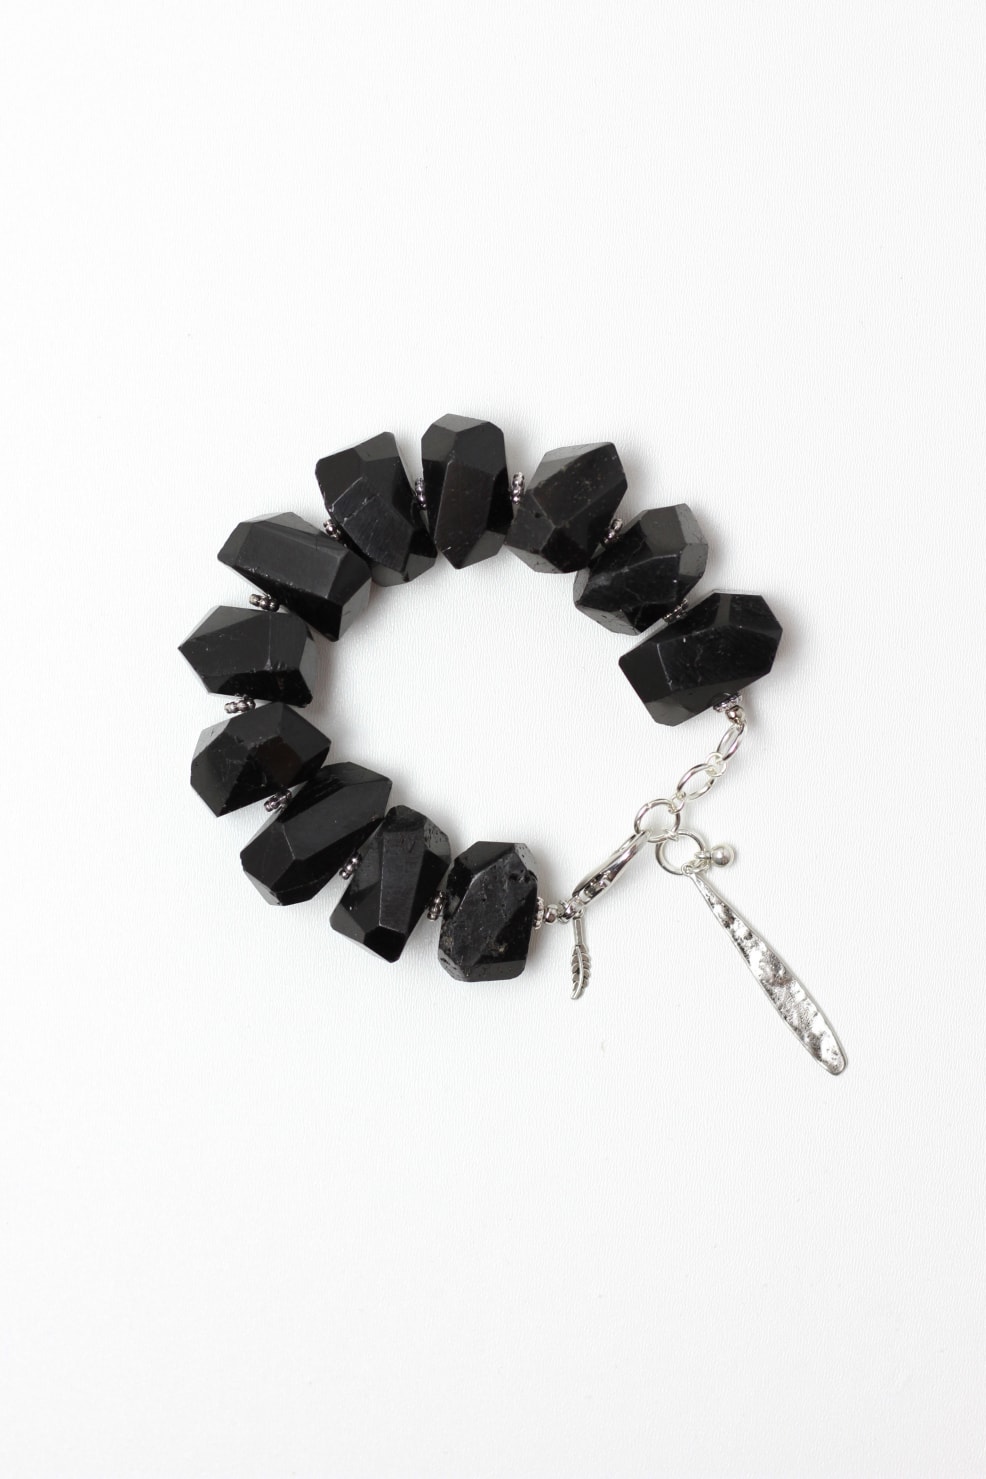 Black tourmaline bracelet